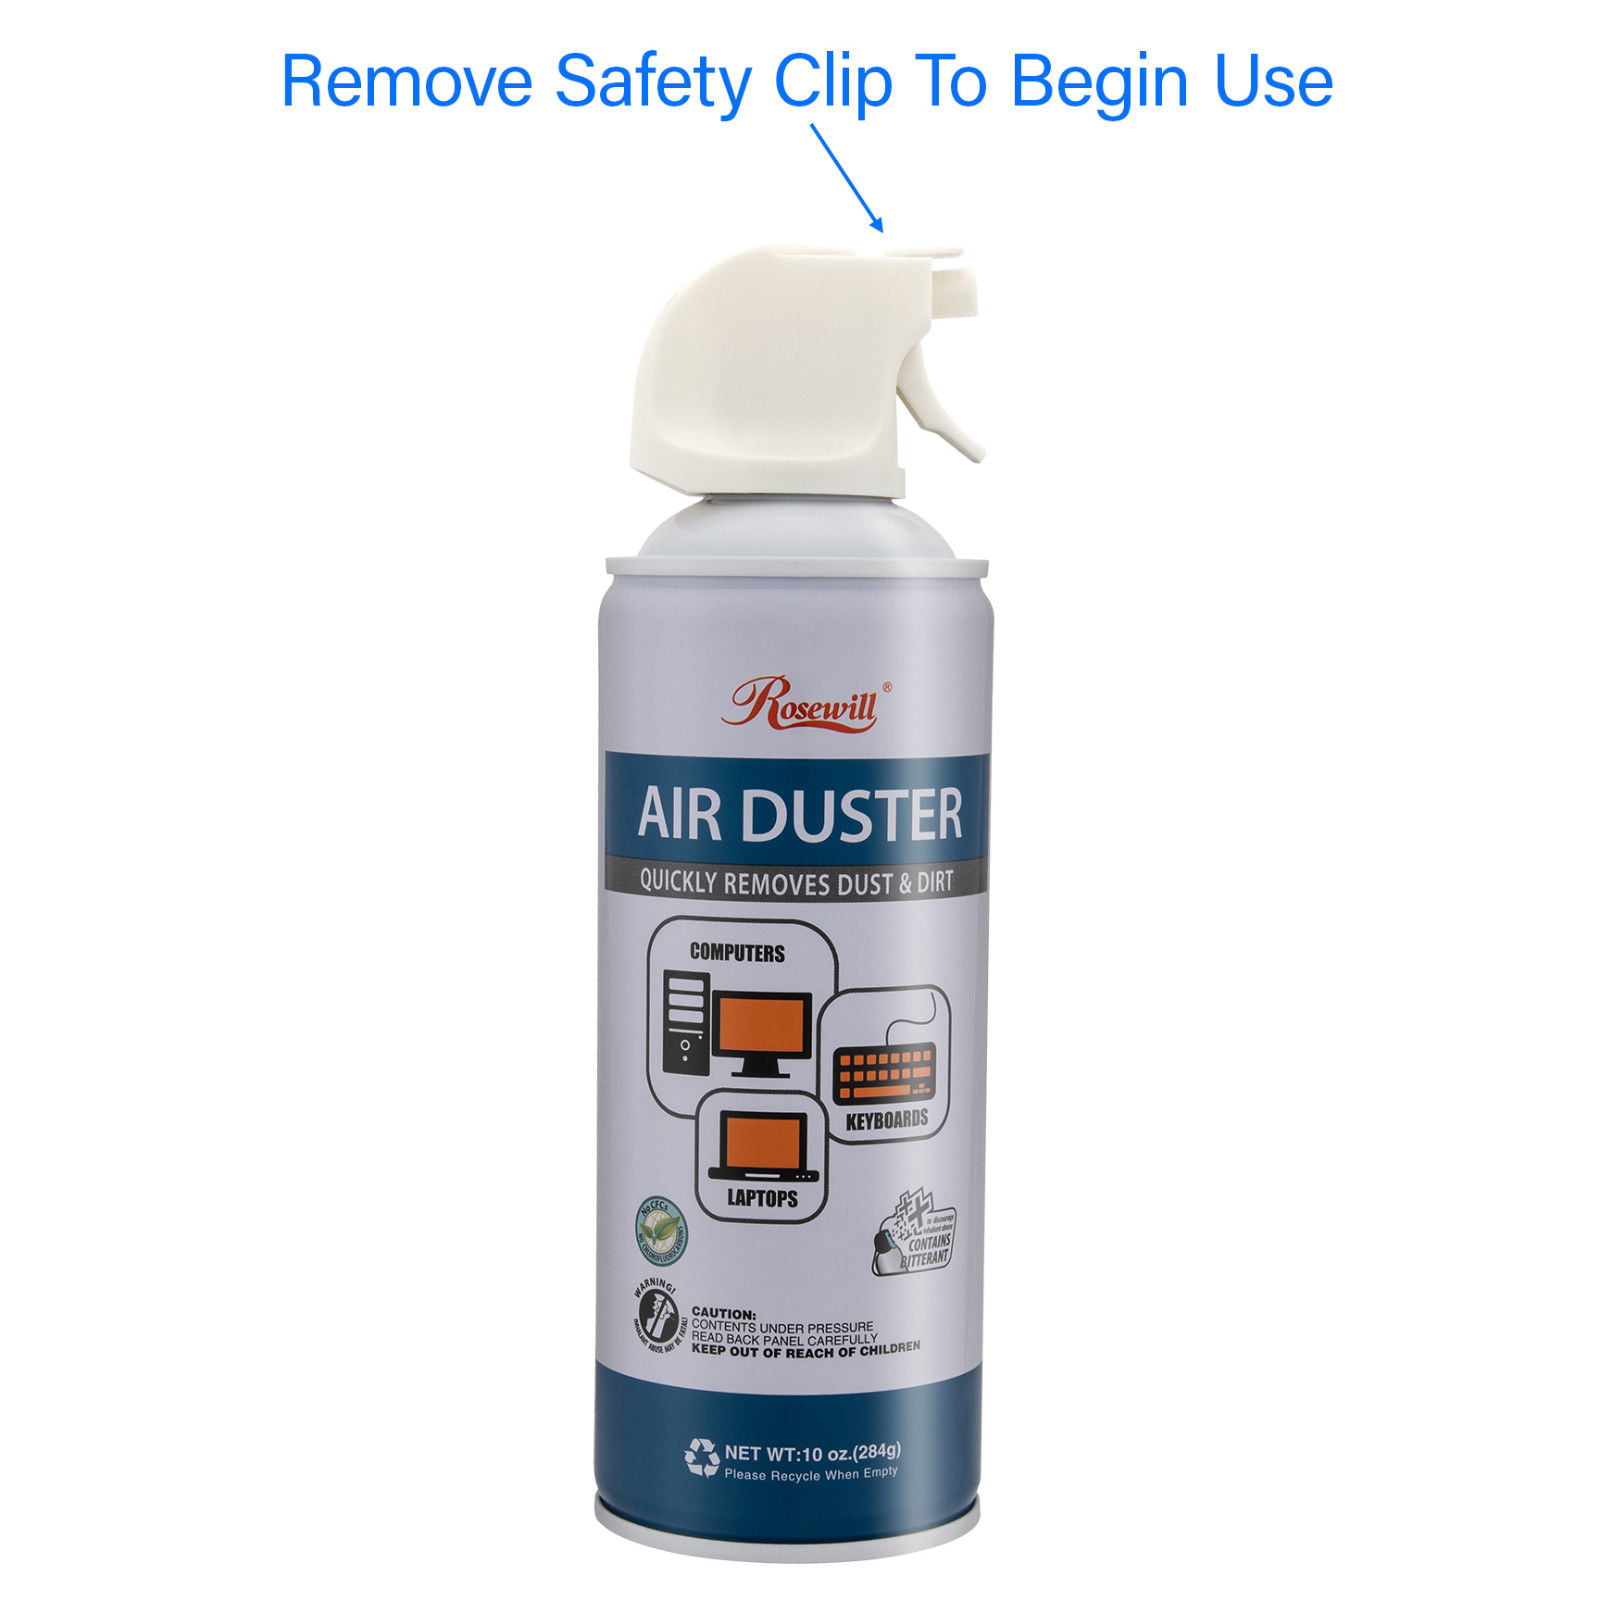 Aire Comprimido Spray Multiproposito Air Duster Limpieza Pc